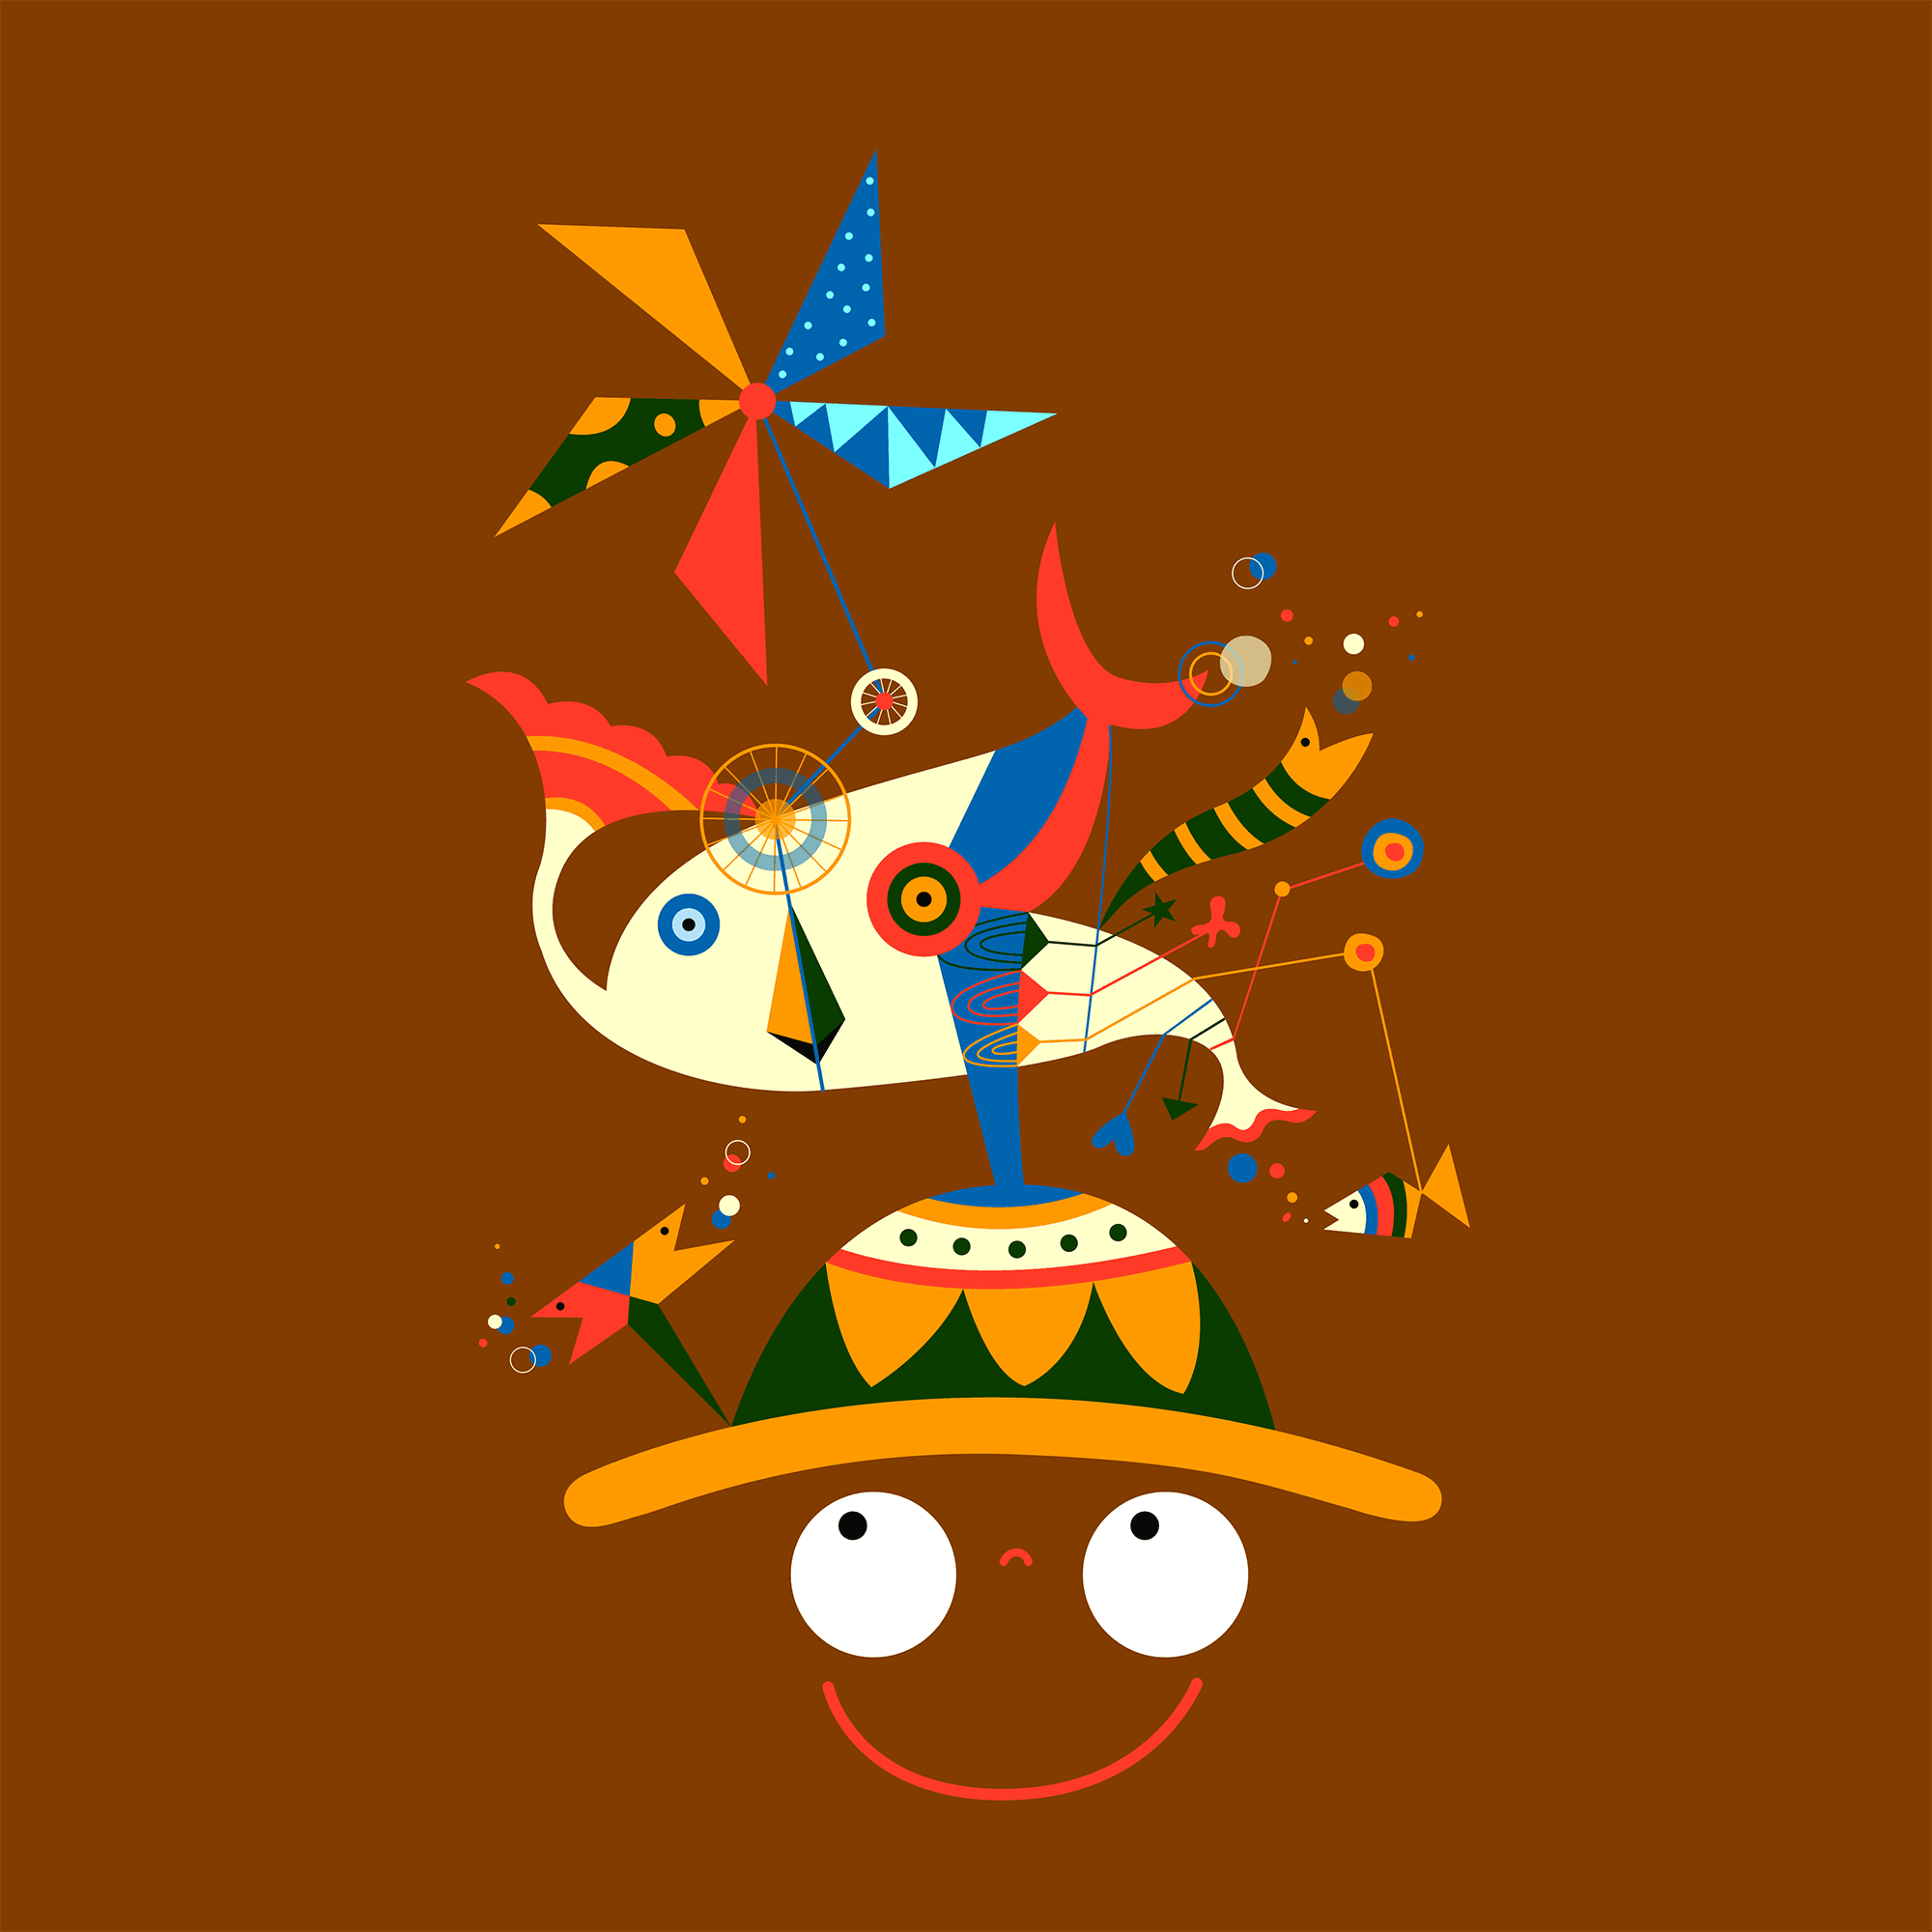 A Boy in a Fish hat